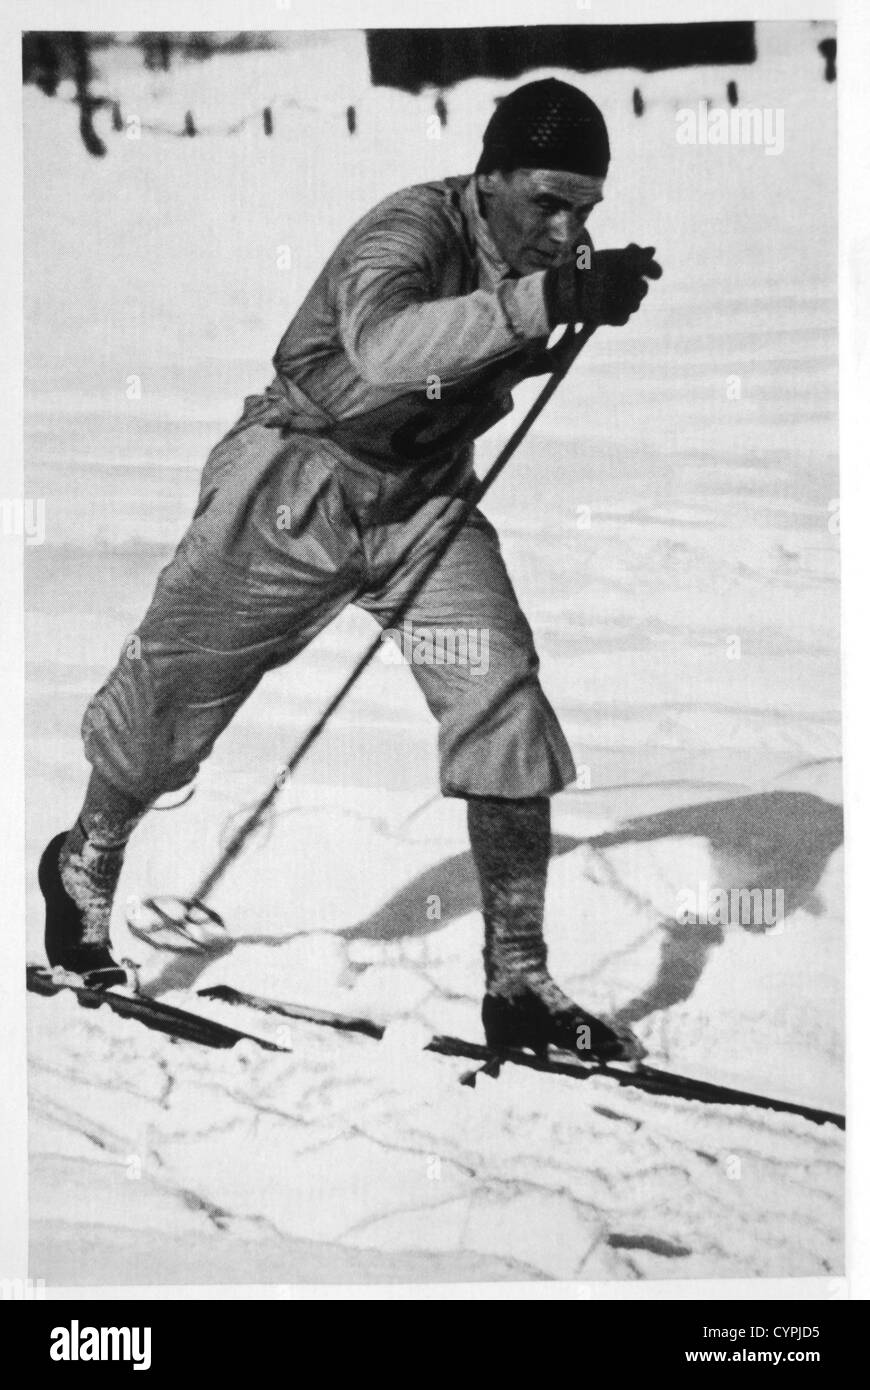 Oddbjorn Hagen, Norwegian Cross Country Skier, 1936 Olympic Winter Games, Garmisch-Partenkirchen, Germany Stock Photo